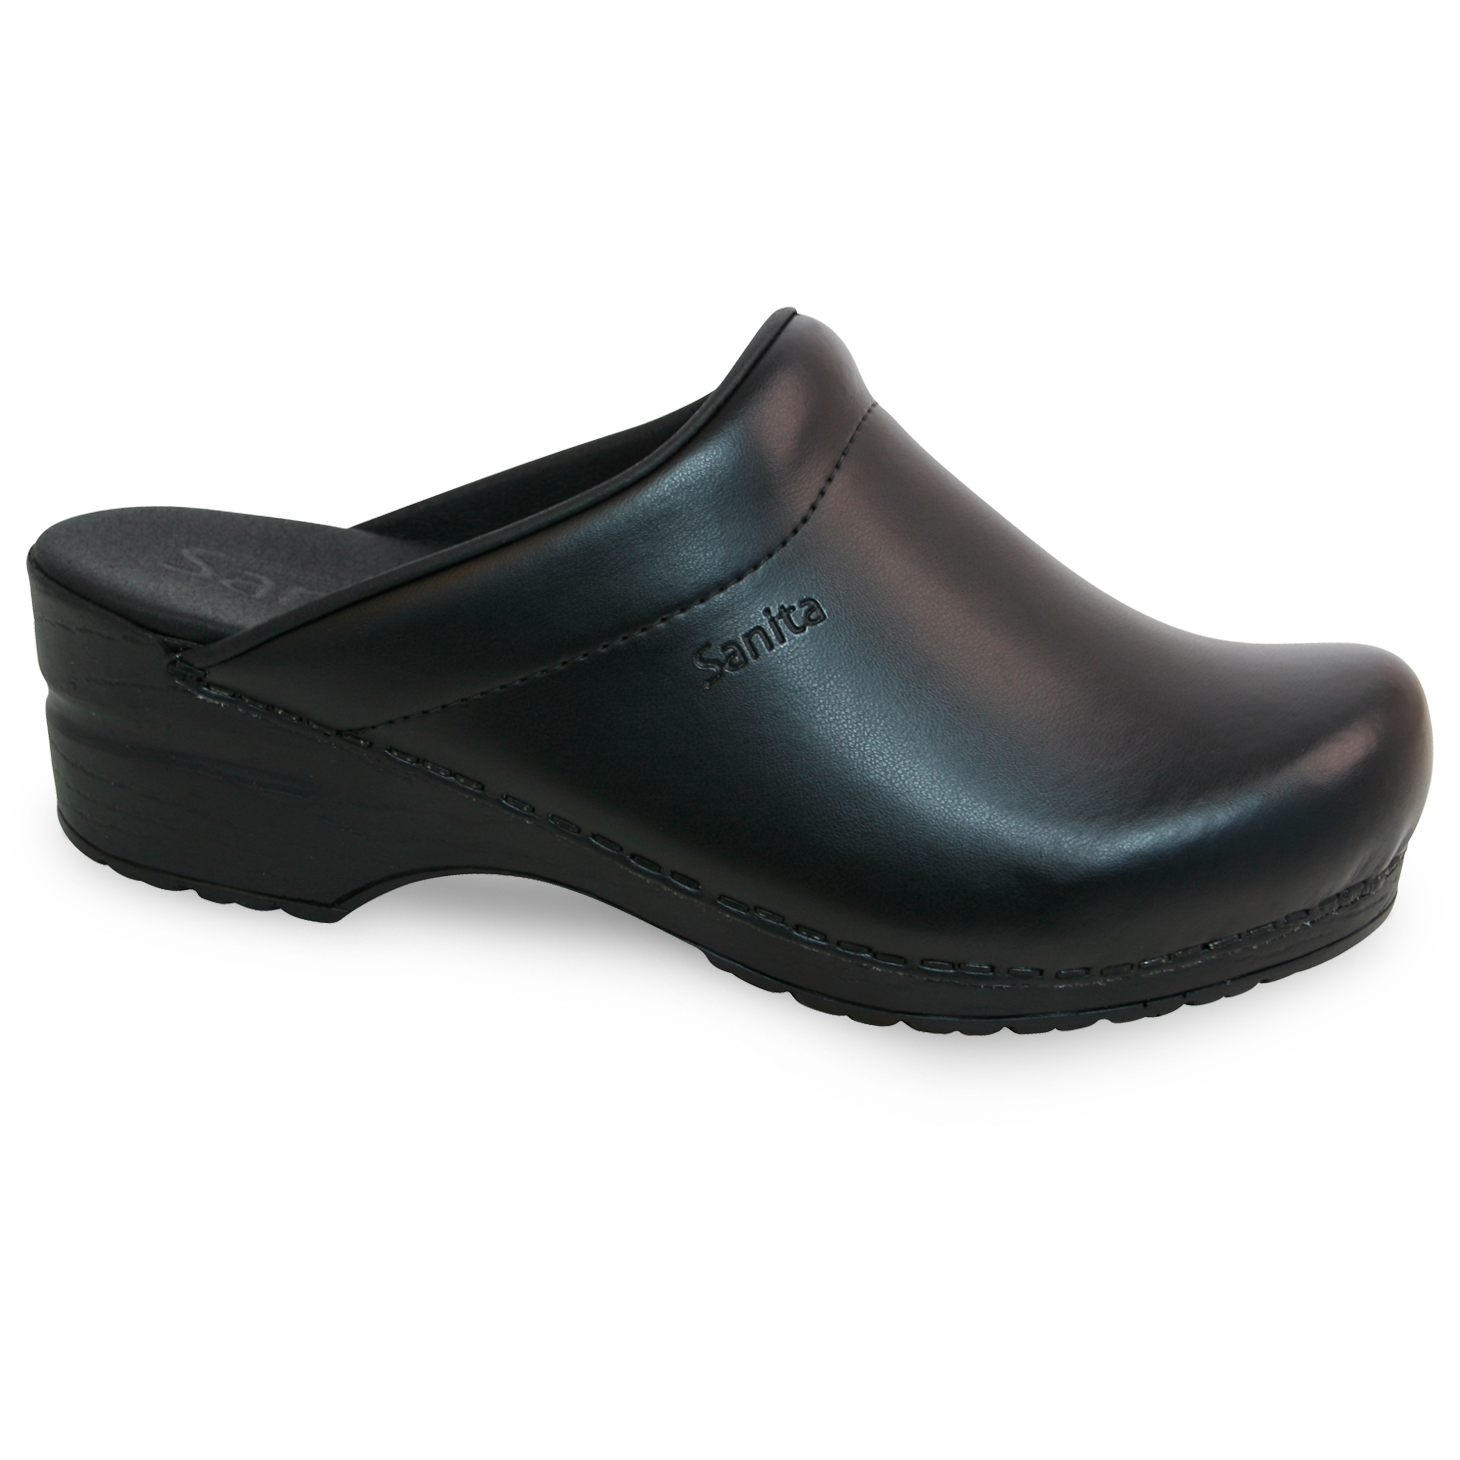 Sanita's Women's Clogs, Boots, & Sandals For Office/Home - Sanita